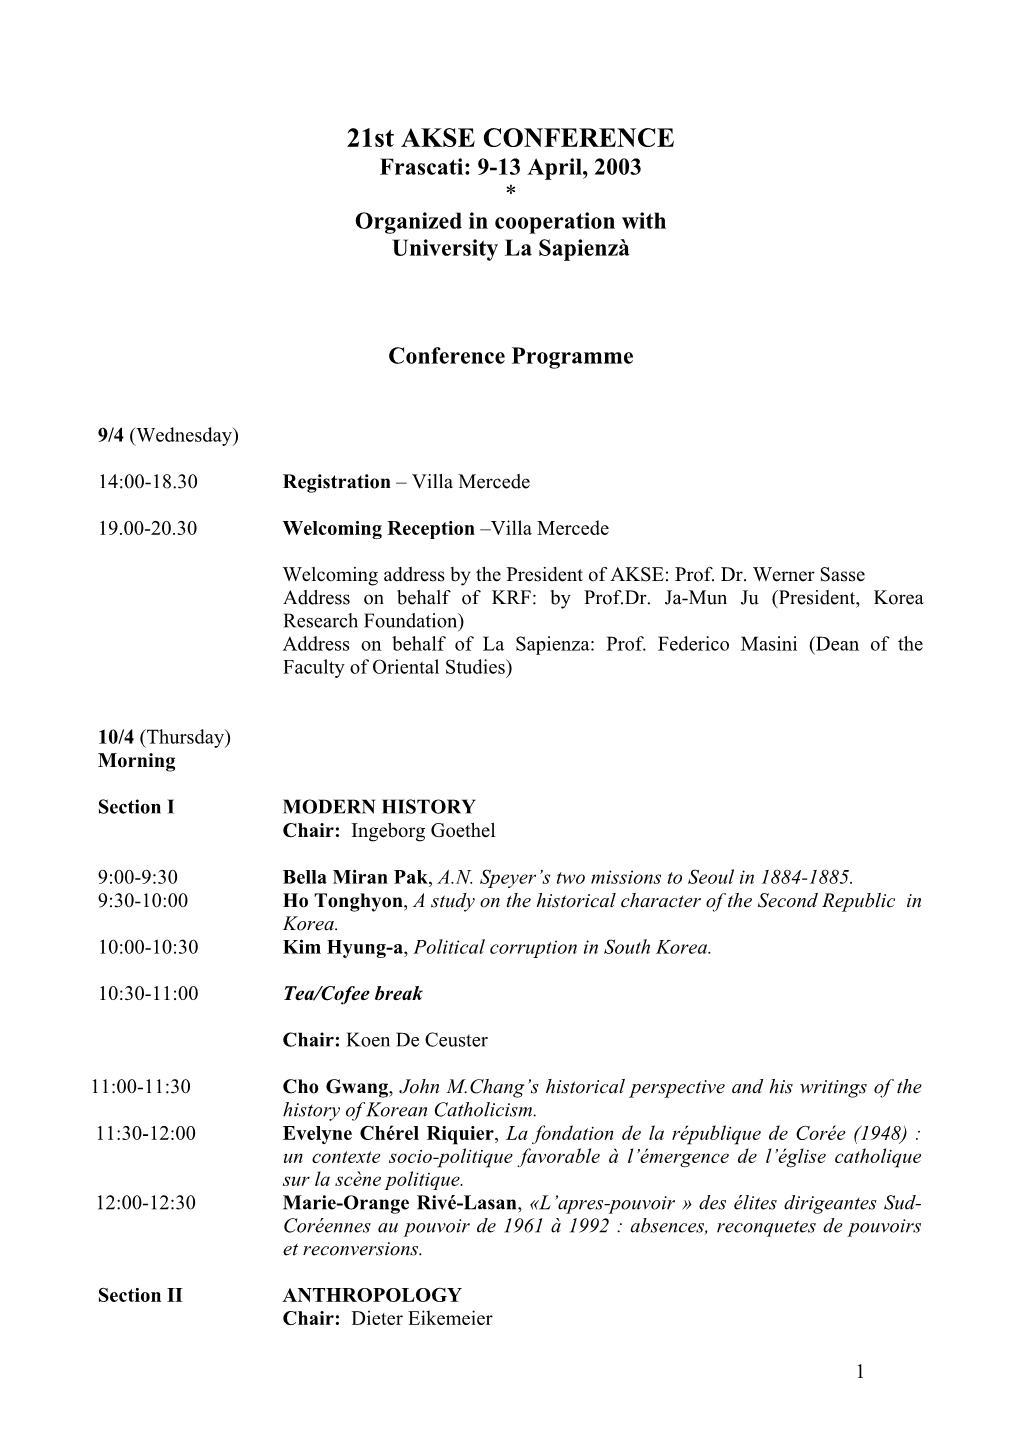 Frascati: 9-13 April, 2003 * Organized in Cooperation with University La Sapienzà